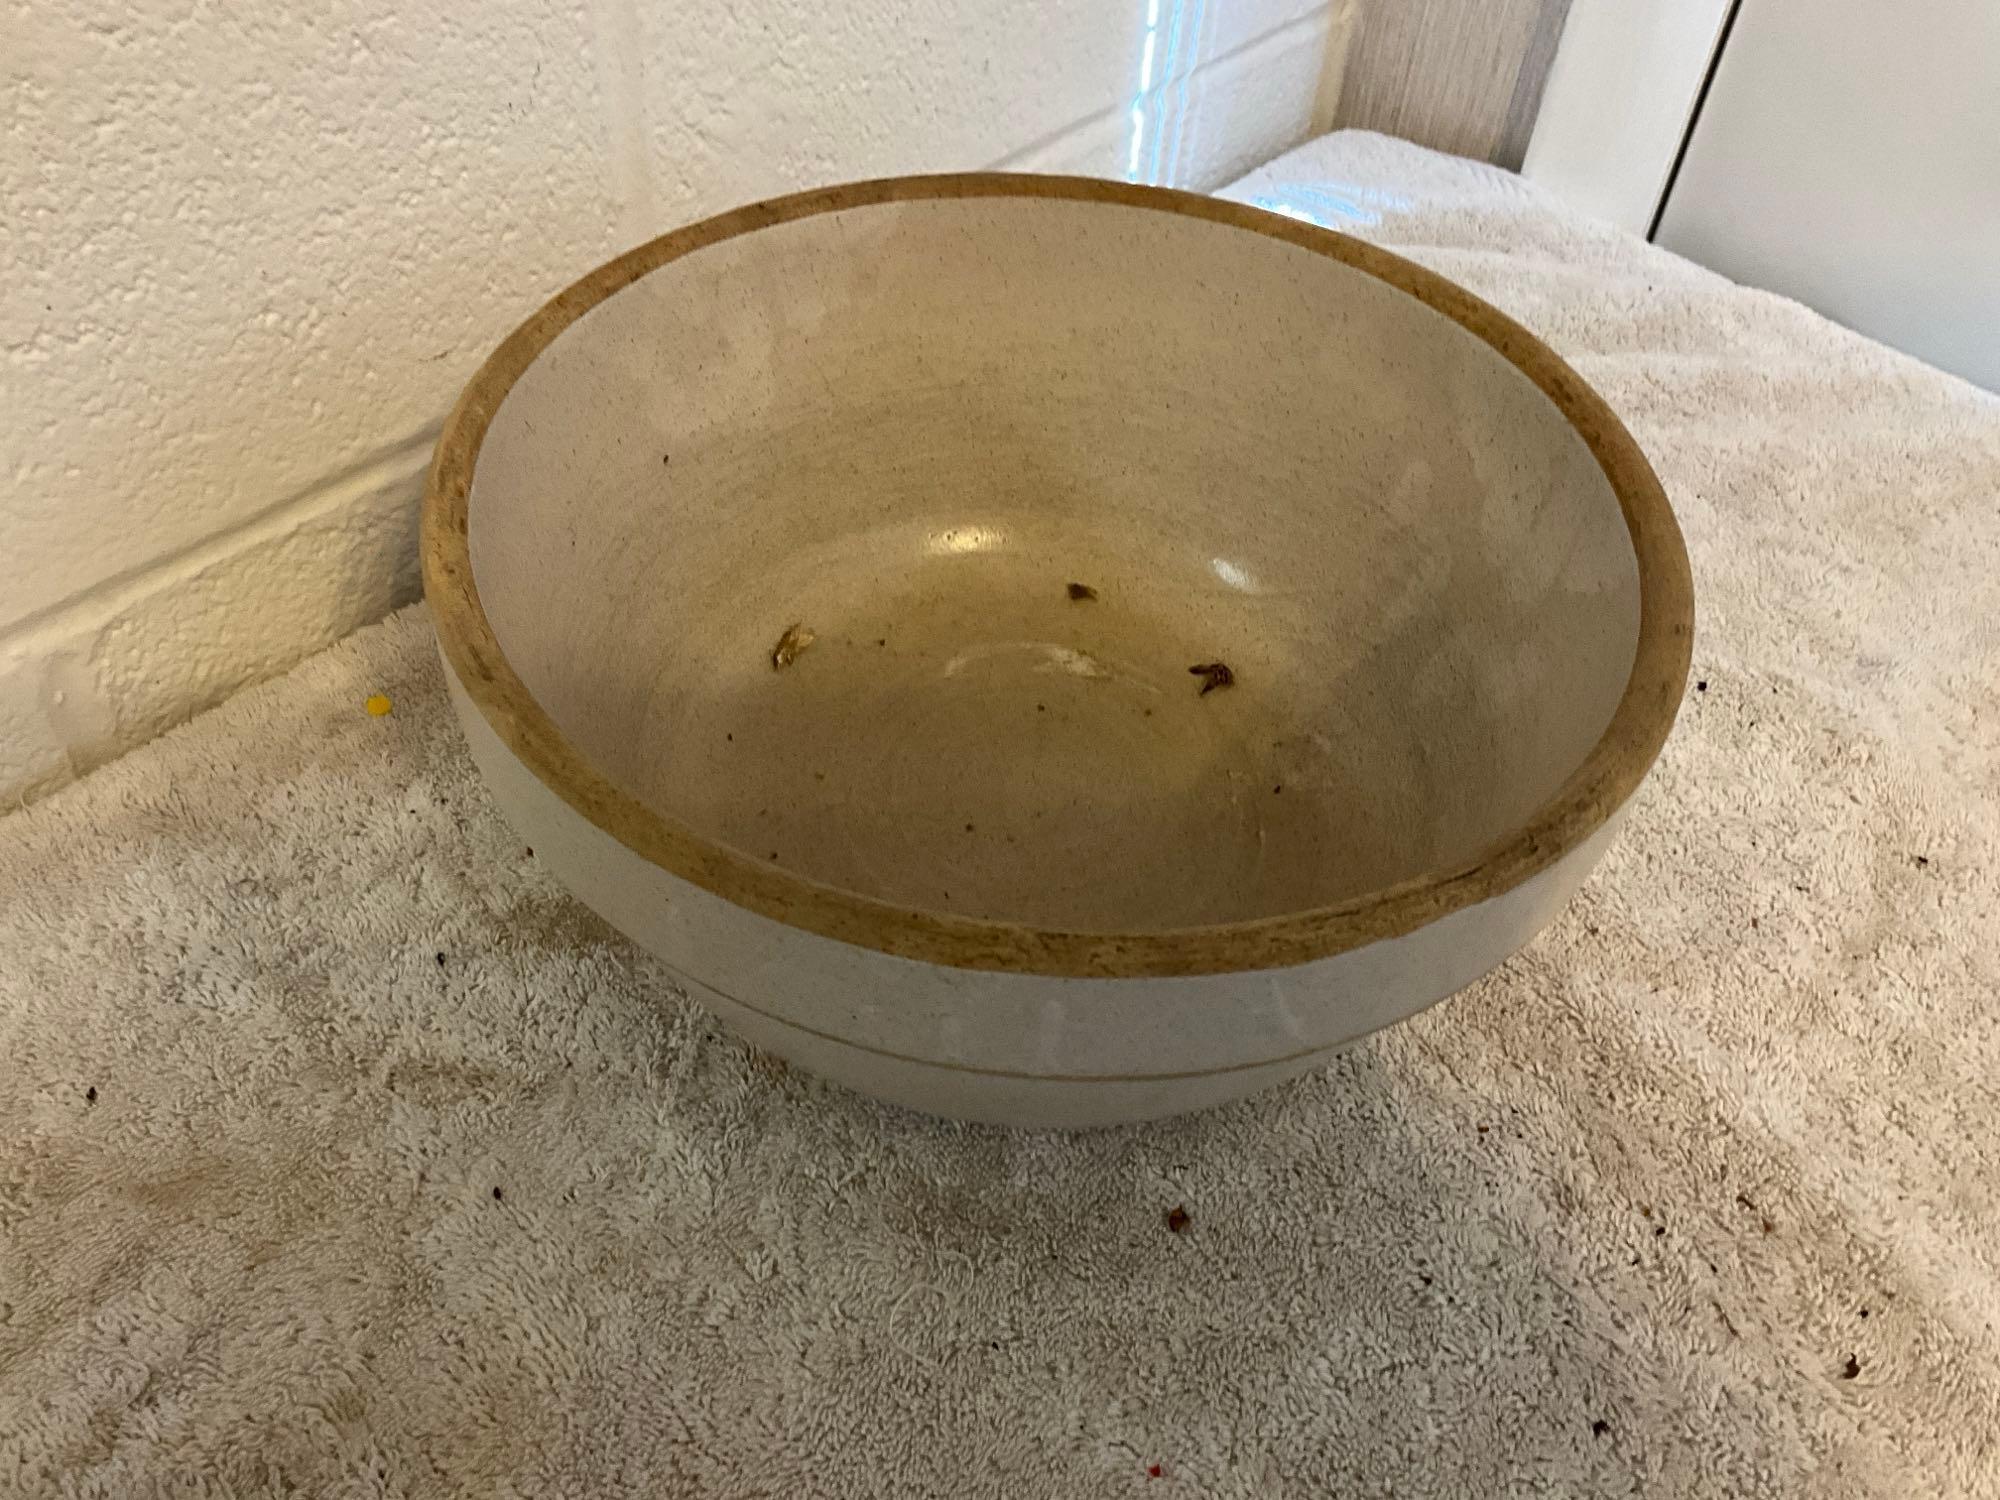 (2) crock ware bowls